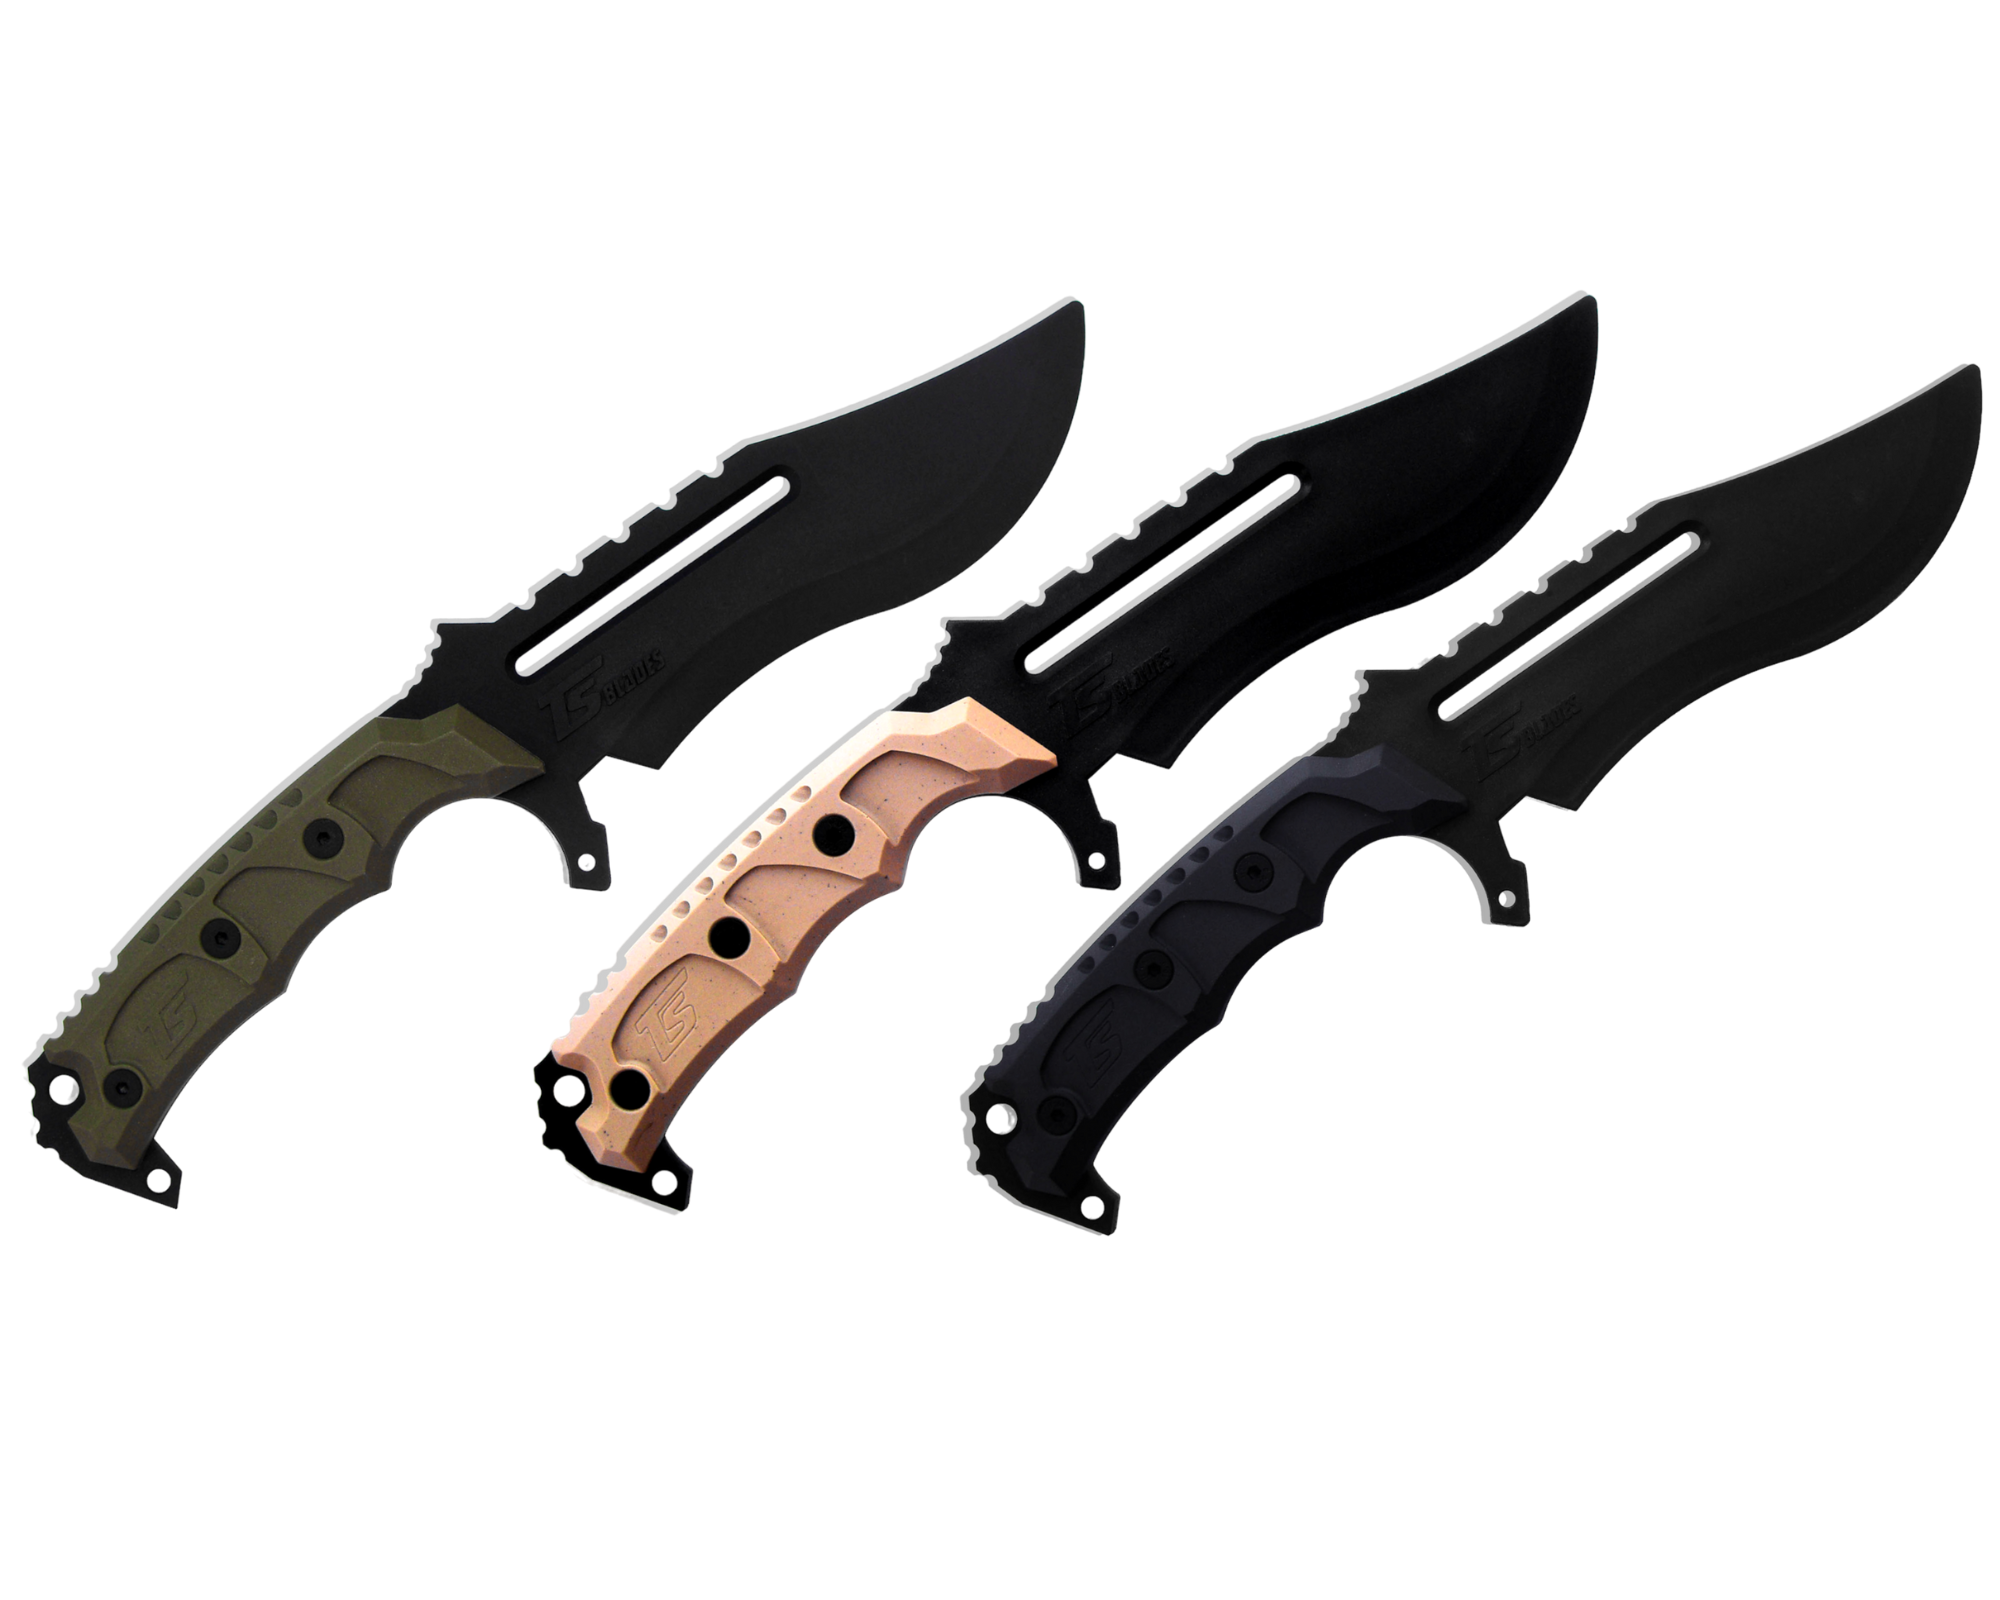 TS Blades Raptor G3 Training Knife - ssairsoft.com